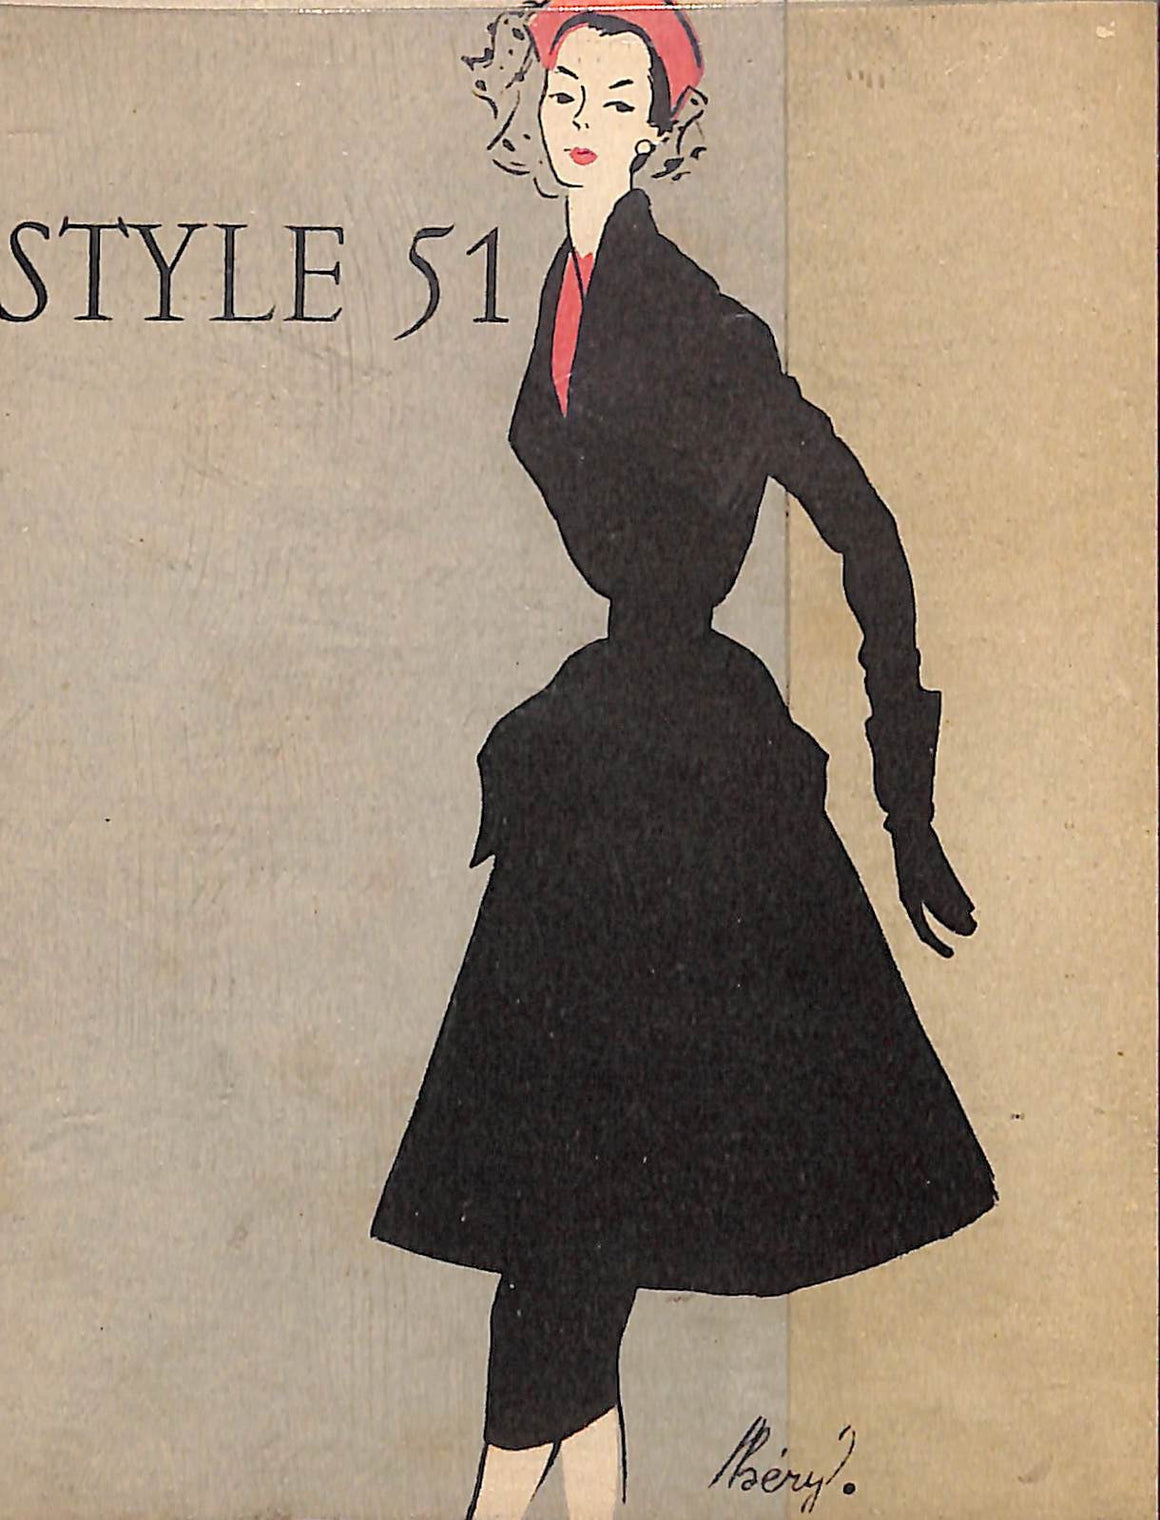 "Style 51"